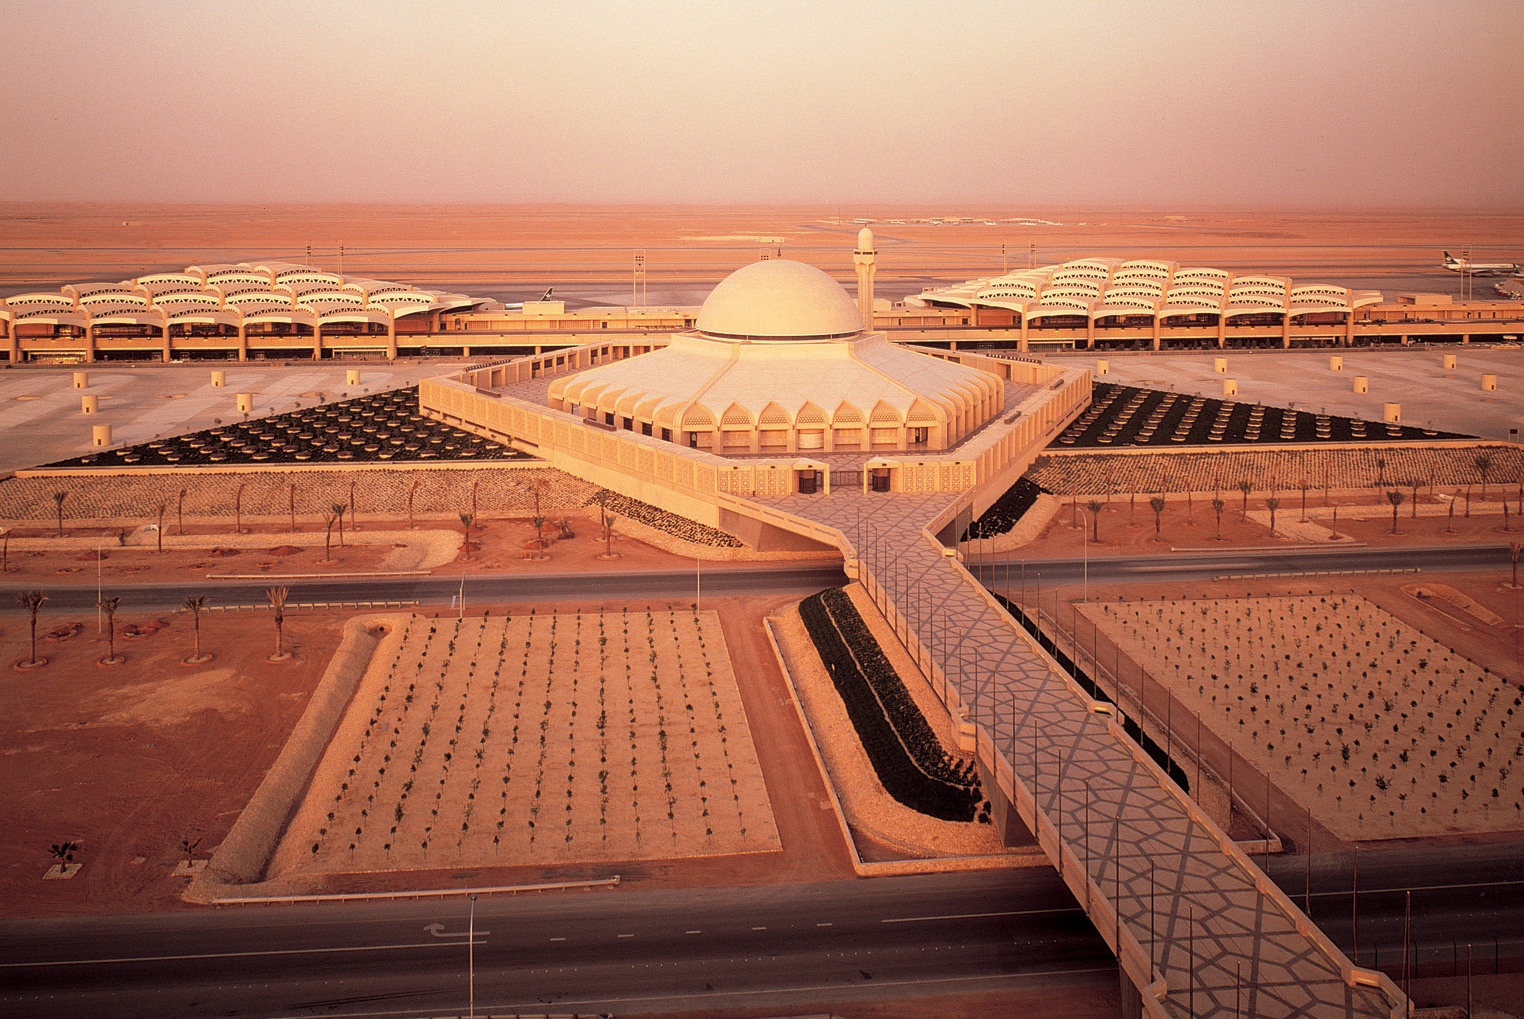 King Khalid International Airport in Riyadh, Saudi Arabia (1983) by Gyo Obata, HOK